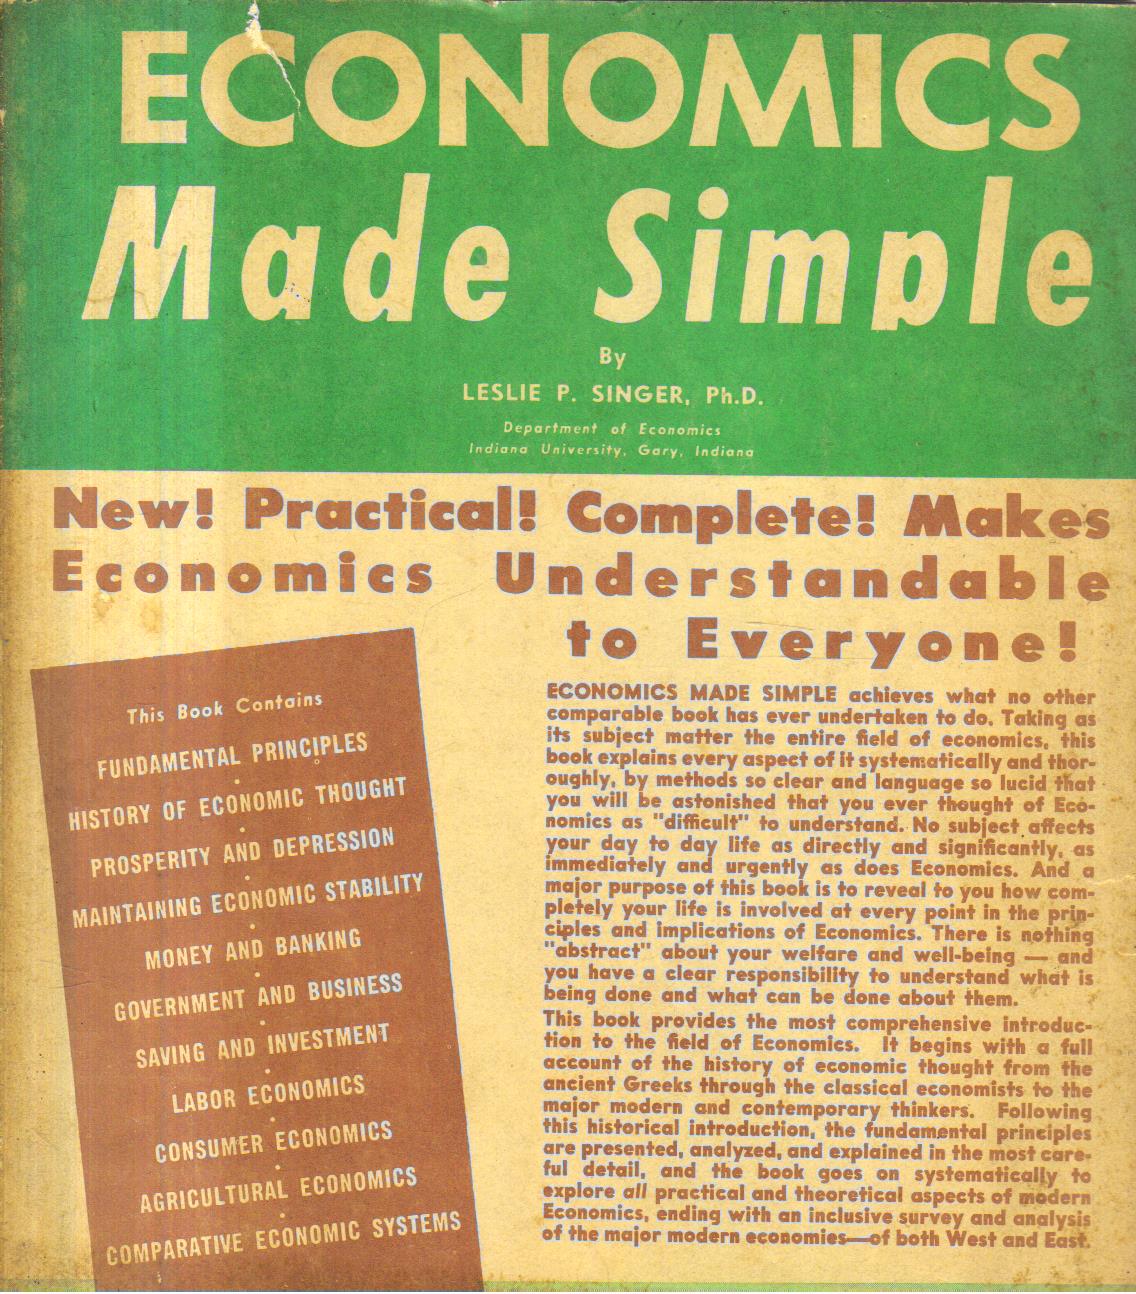 Economics Made Simple